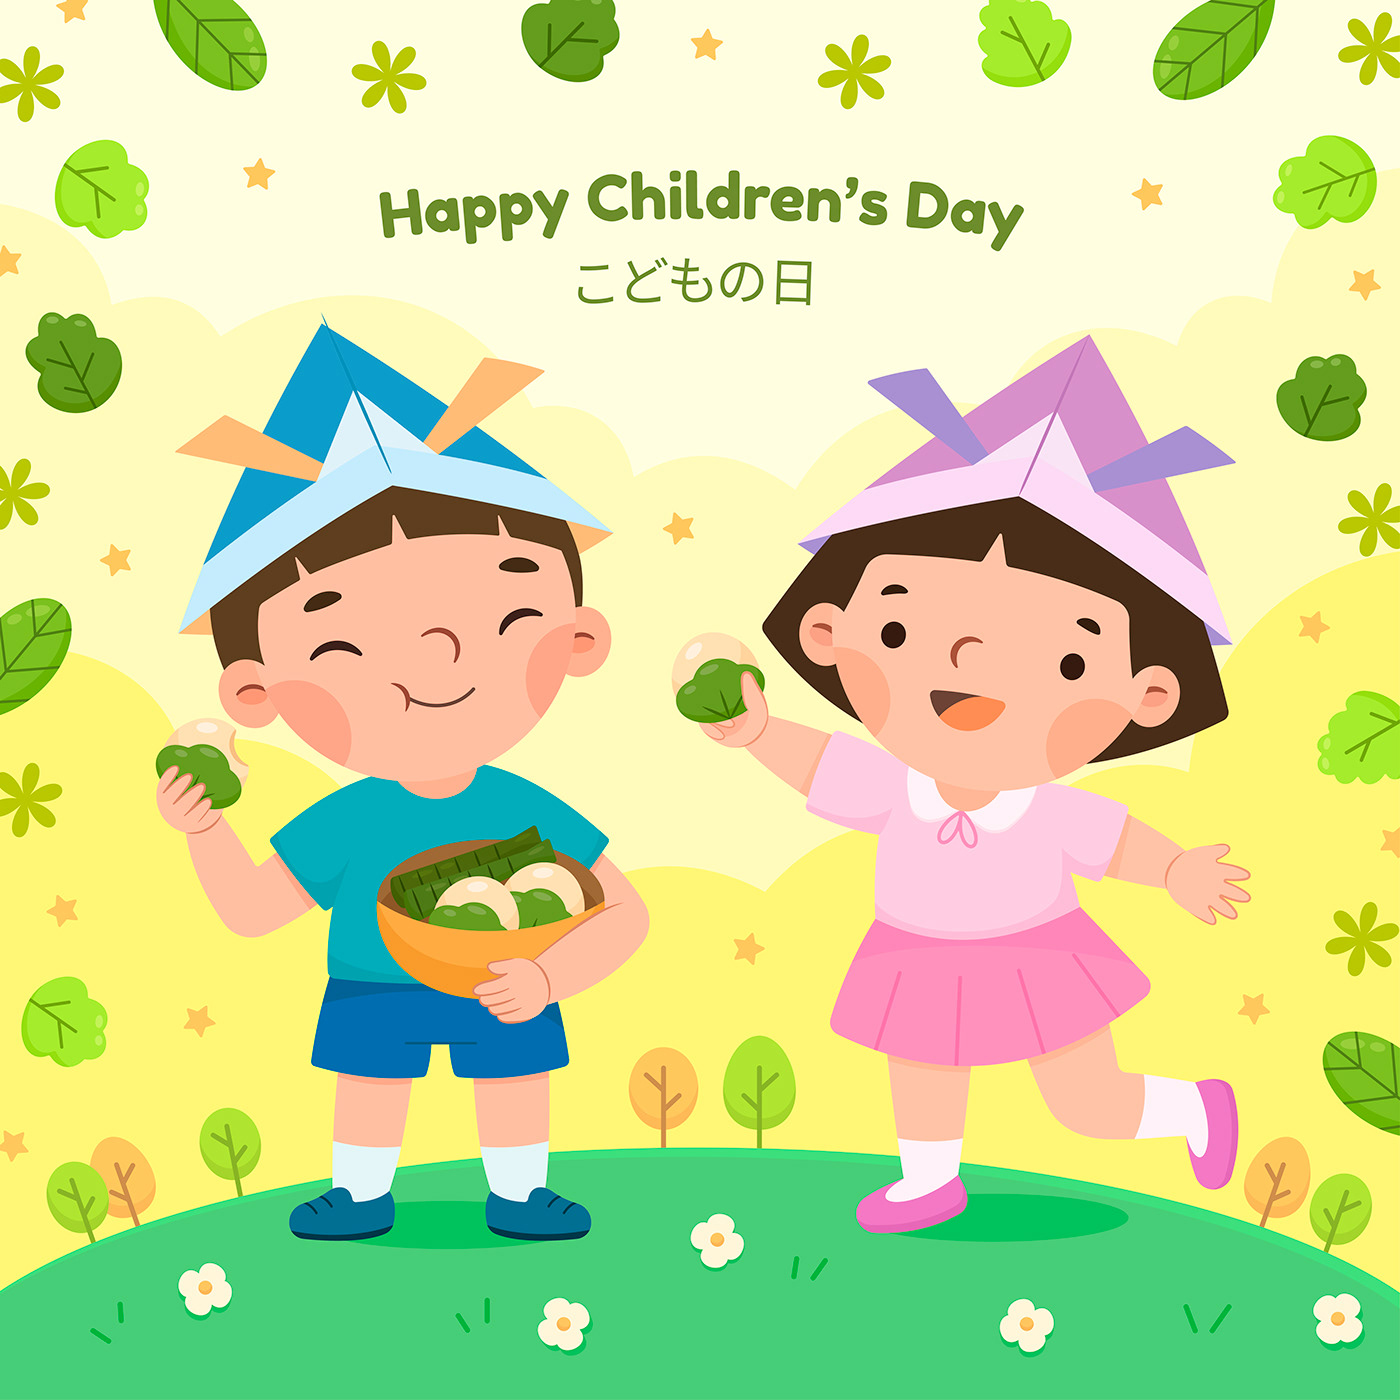 kodomo no hi happy childrens day fish japan children illustration educational design educational illustration Kids Day japanese children kids background